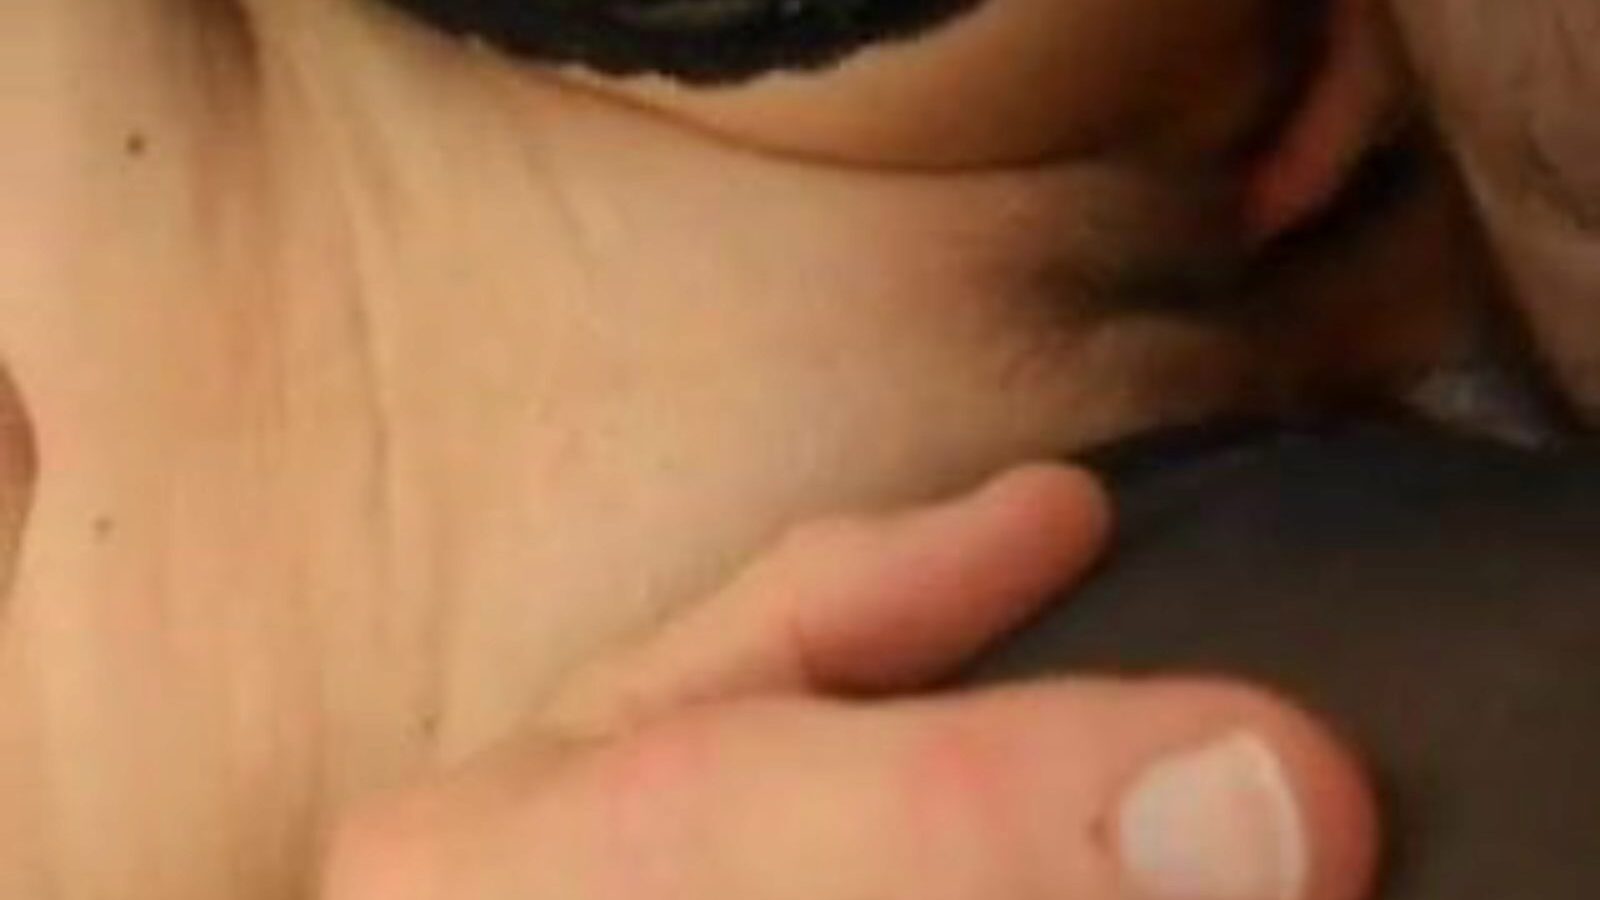 cum on pussylips: new on netflix porn video bb - xhamster watch cum on pussylips tube hump clip δωρεάν στο xhamster, με την πιο σέξι νέα του netflix spread cunt & show porno video σκηνές